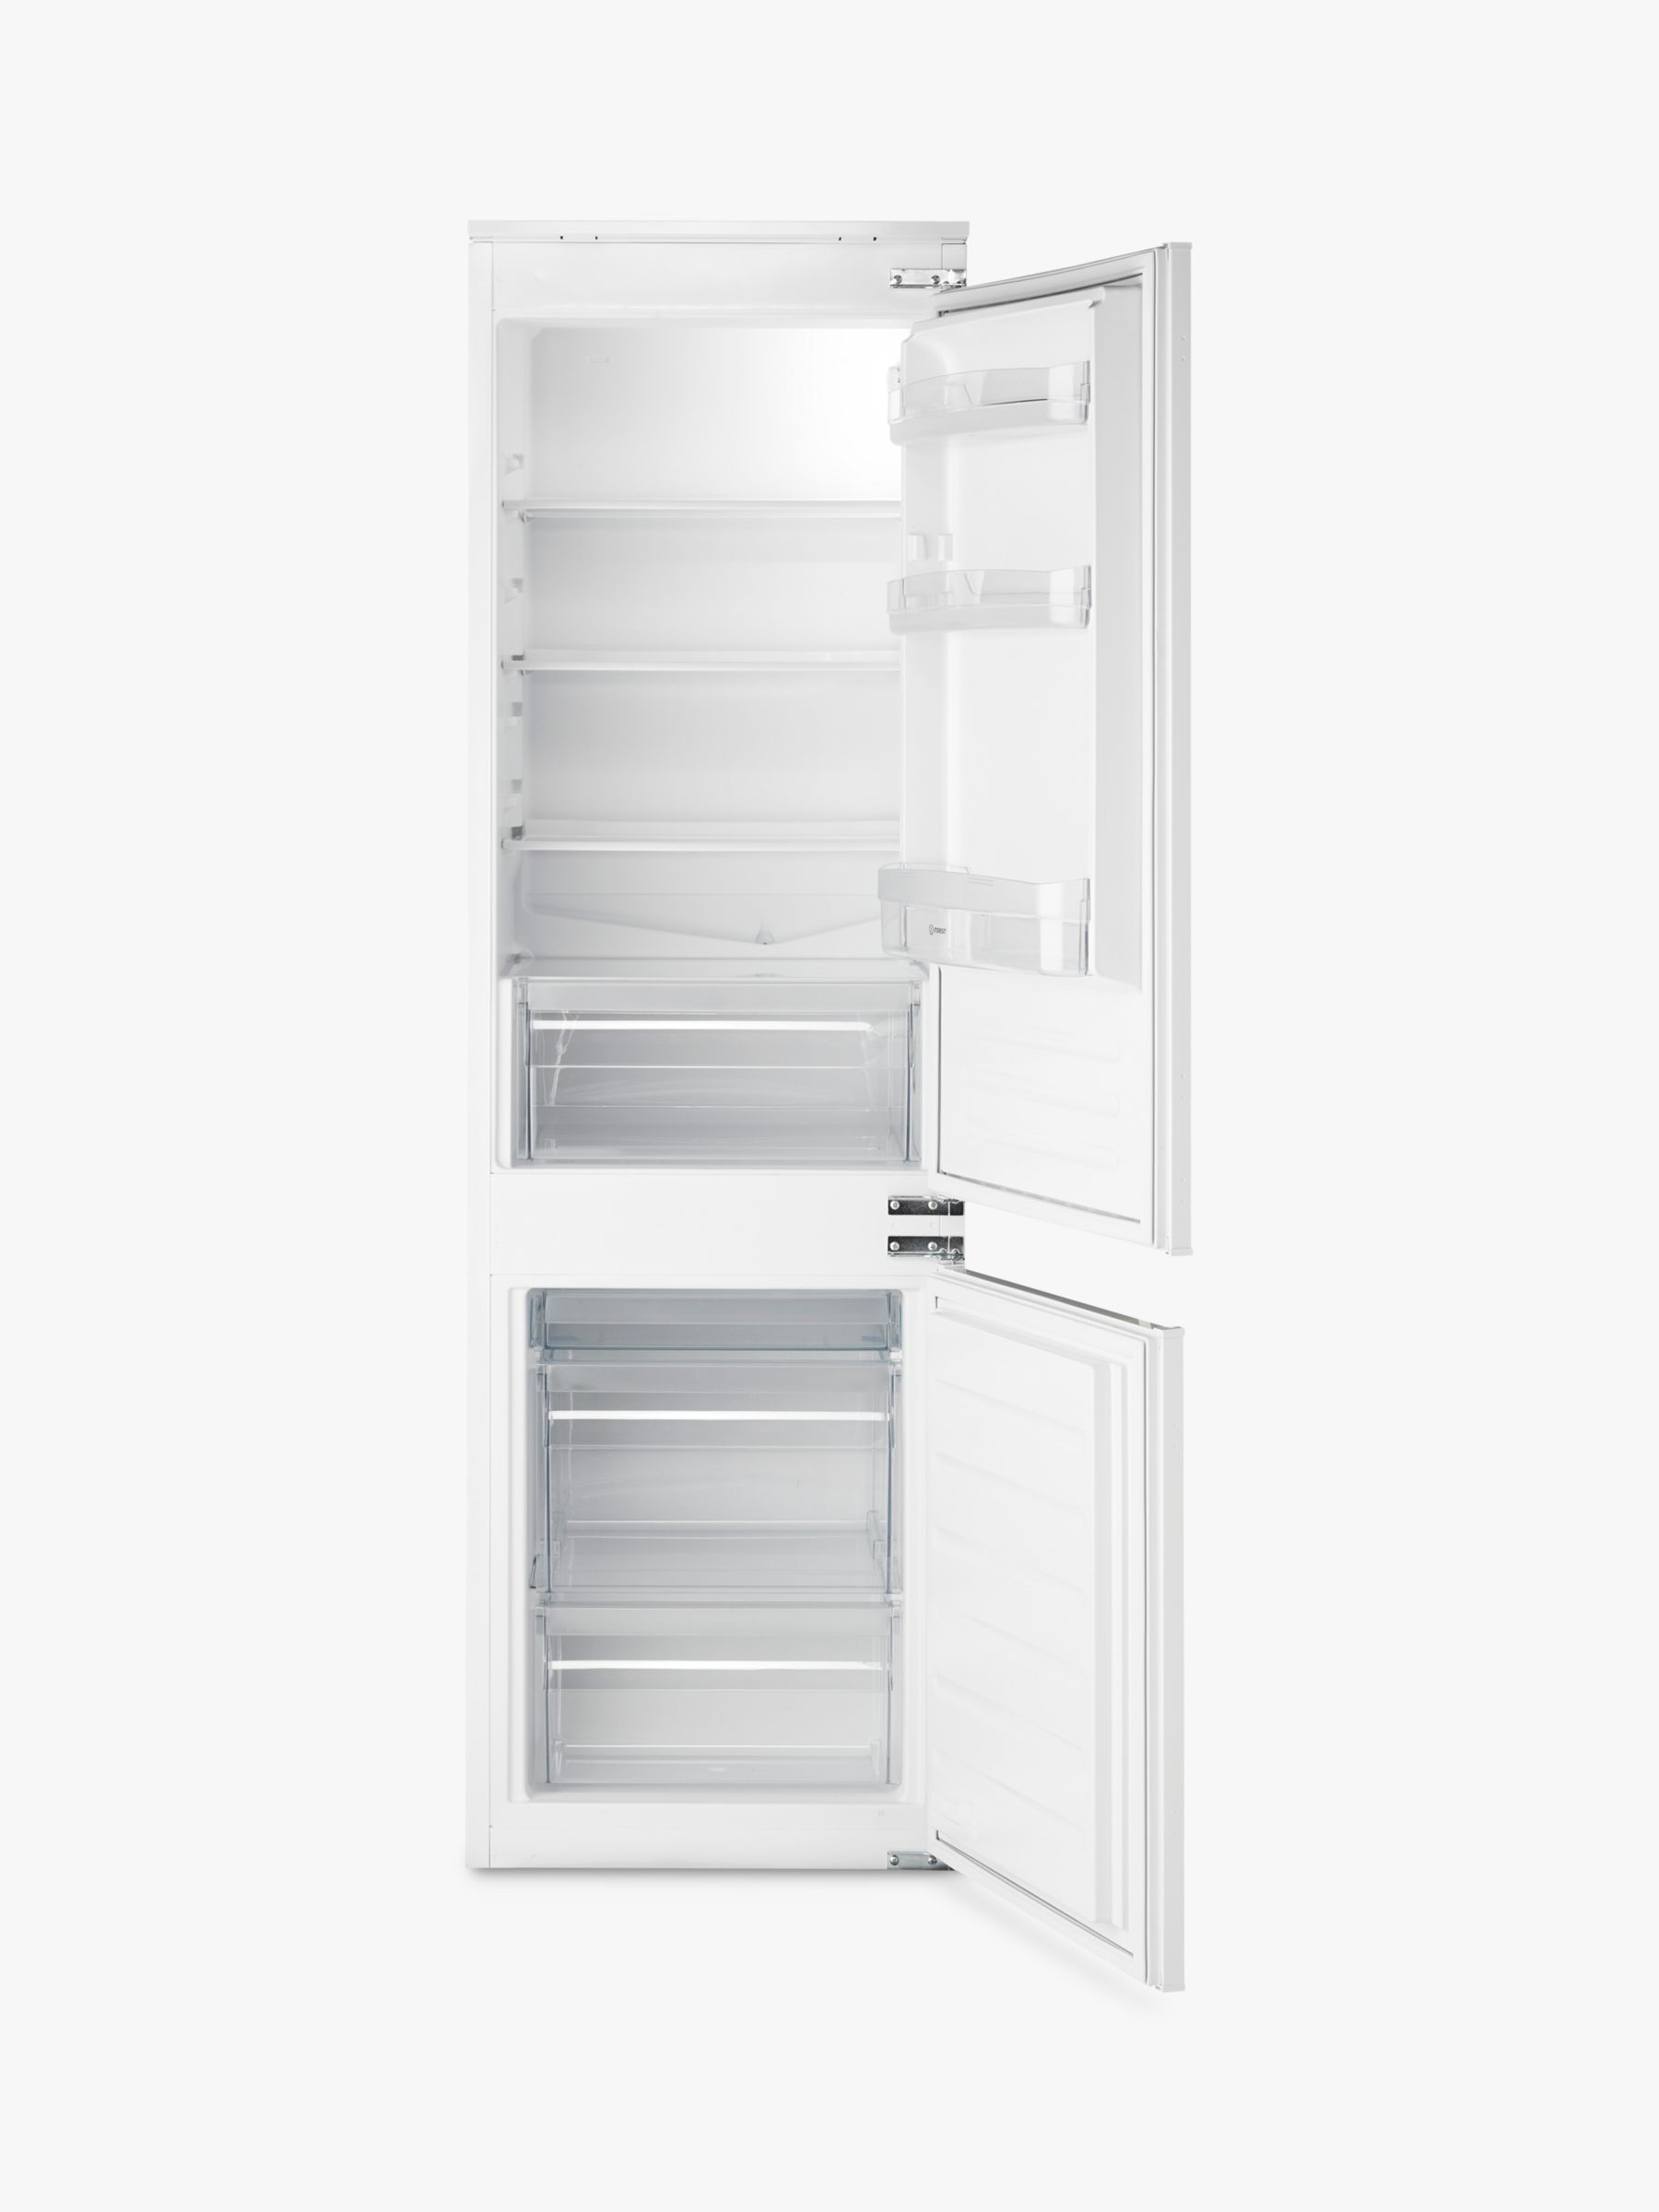 Indesit IB7030A1D.UK Intergrated Fridge Freezer A+ Energy Rating, 54cm Wide, White